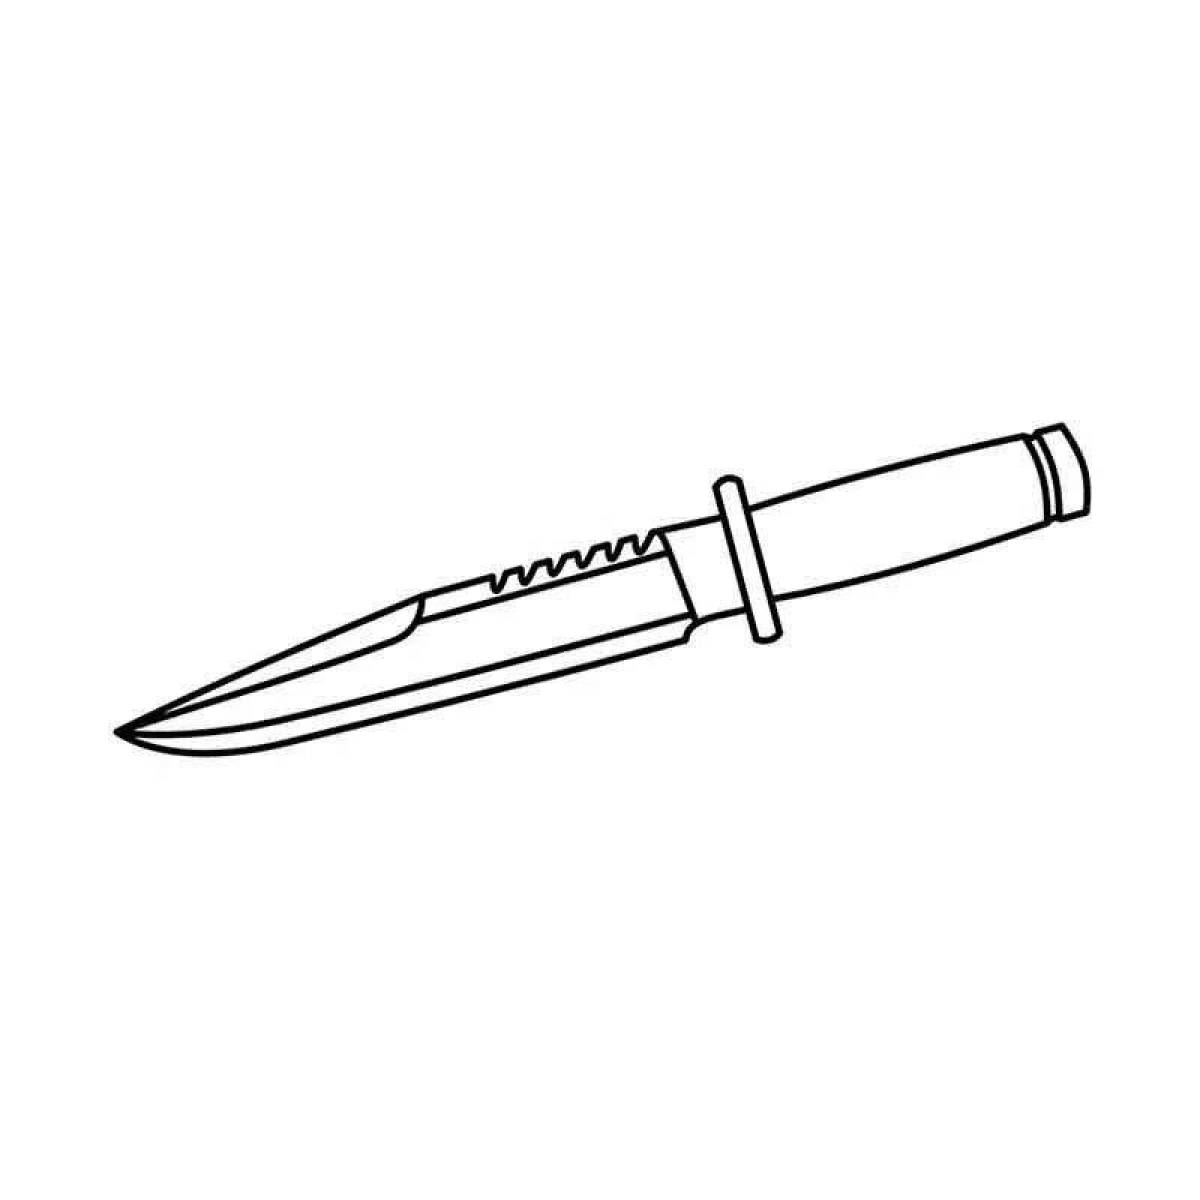 Ножи из standoff рисунок. Нож м9 байонет чертеж. Нож м9 байонет раскраски. Раскраски стандофф 2 ножи м9 байонет. Штык нож м9 раскраска.